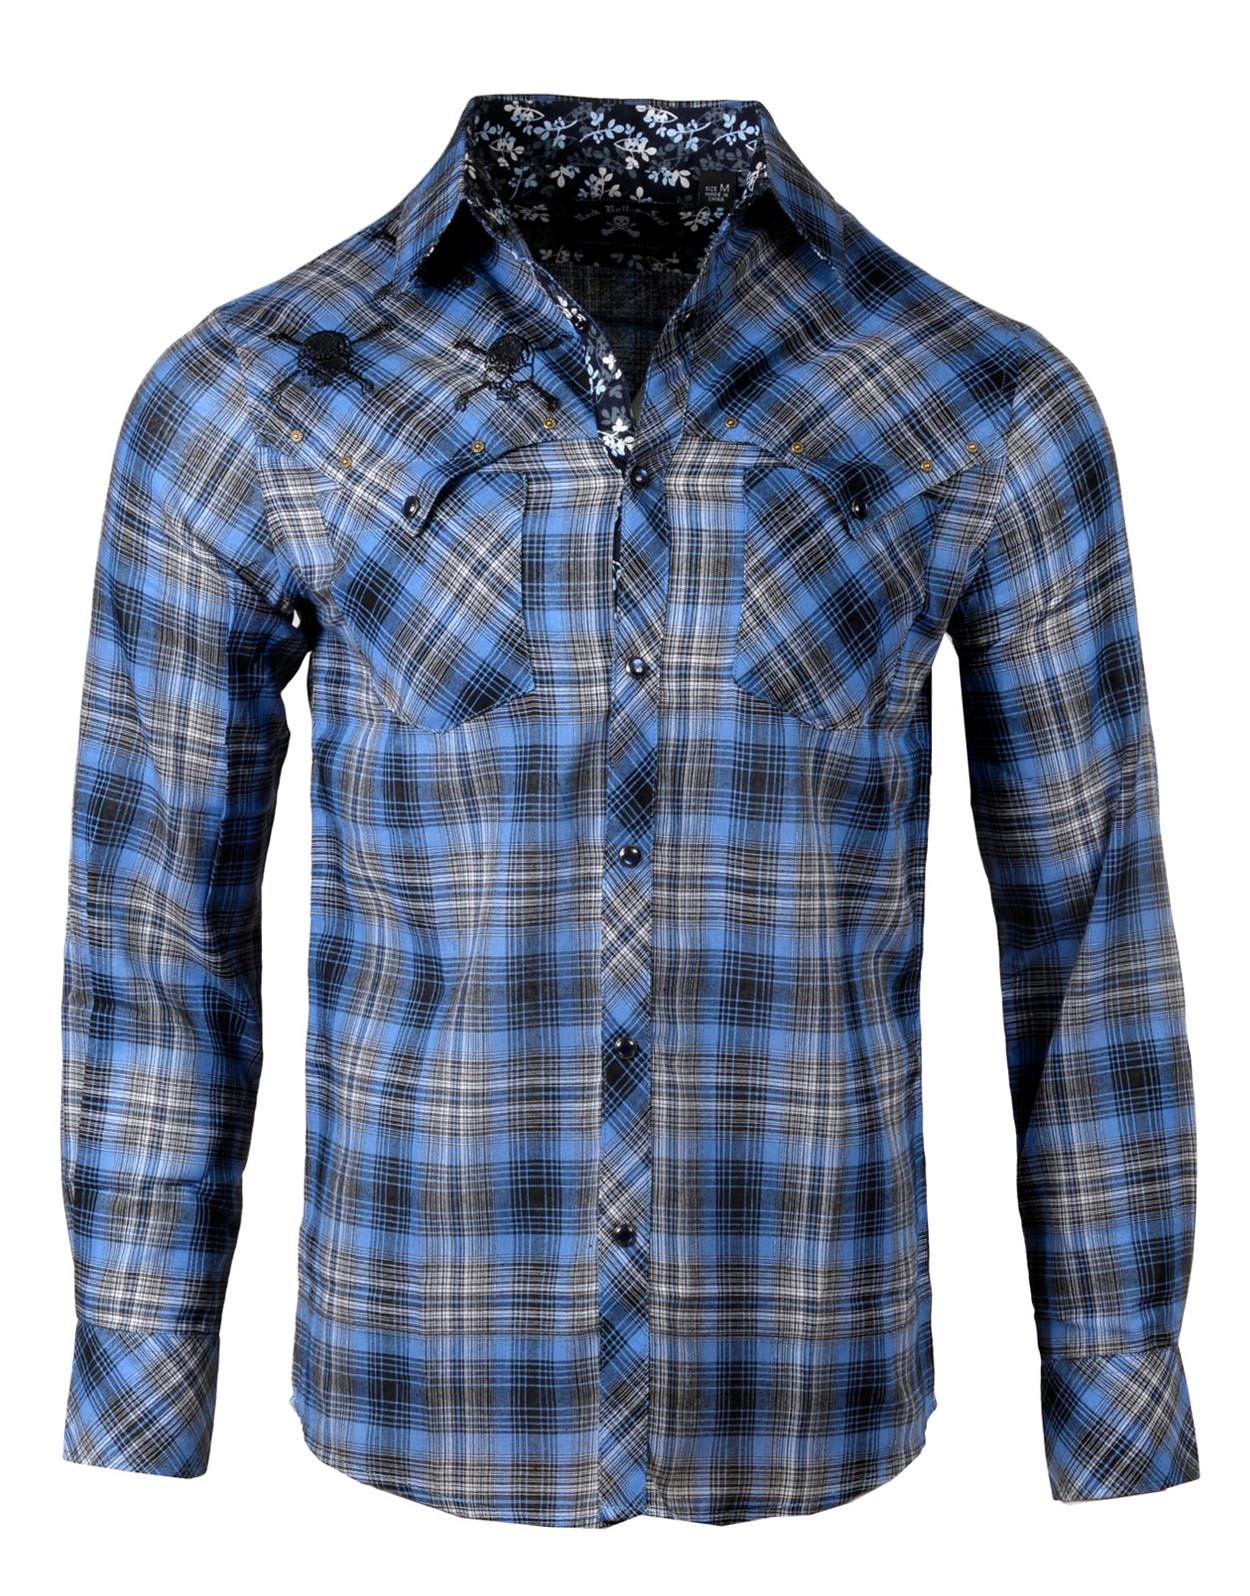 Men's Button up Plaid Shirt | Blue on Black by Rock Roll n Soul